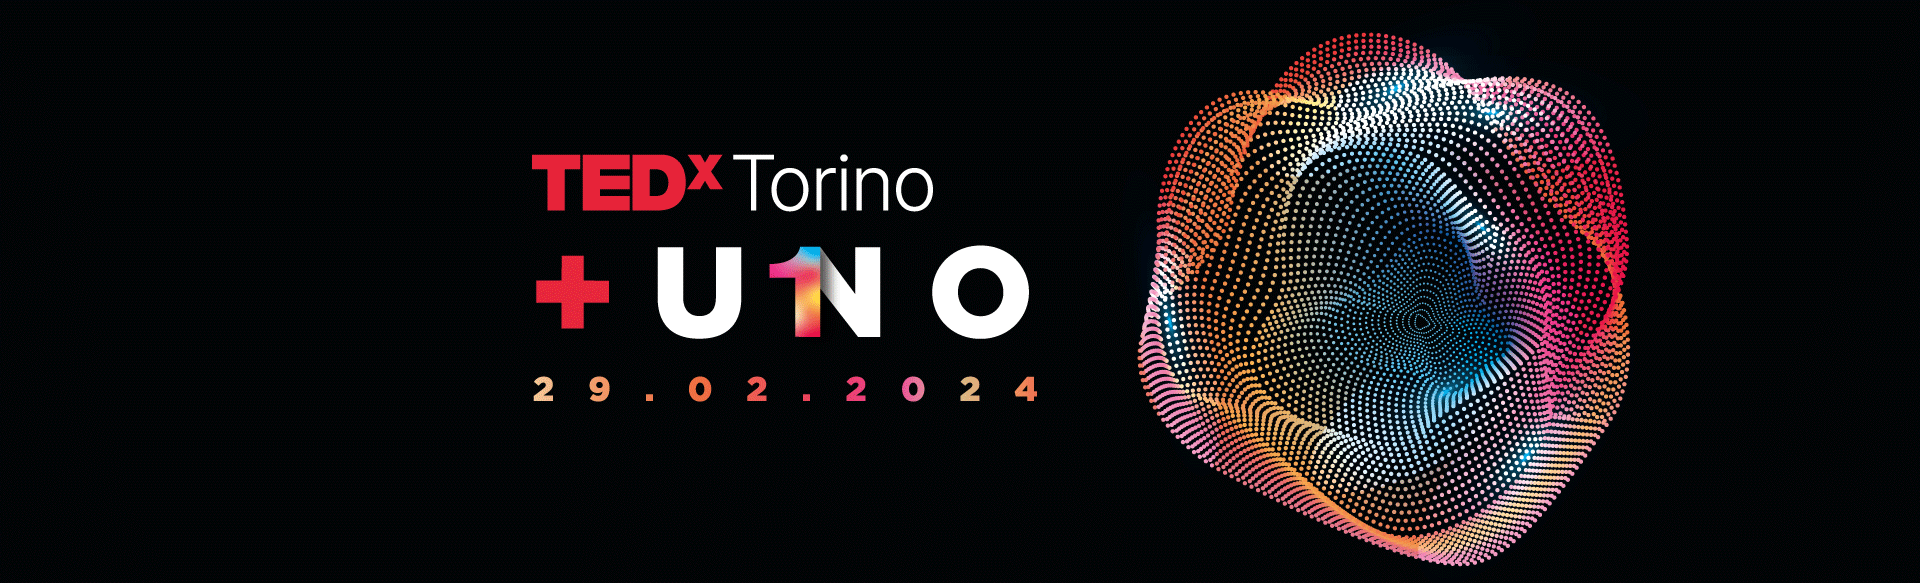 TEDxTorino +UNO - 29.02.2024